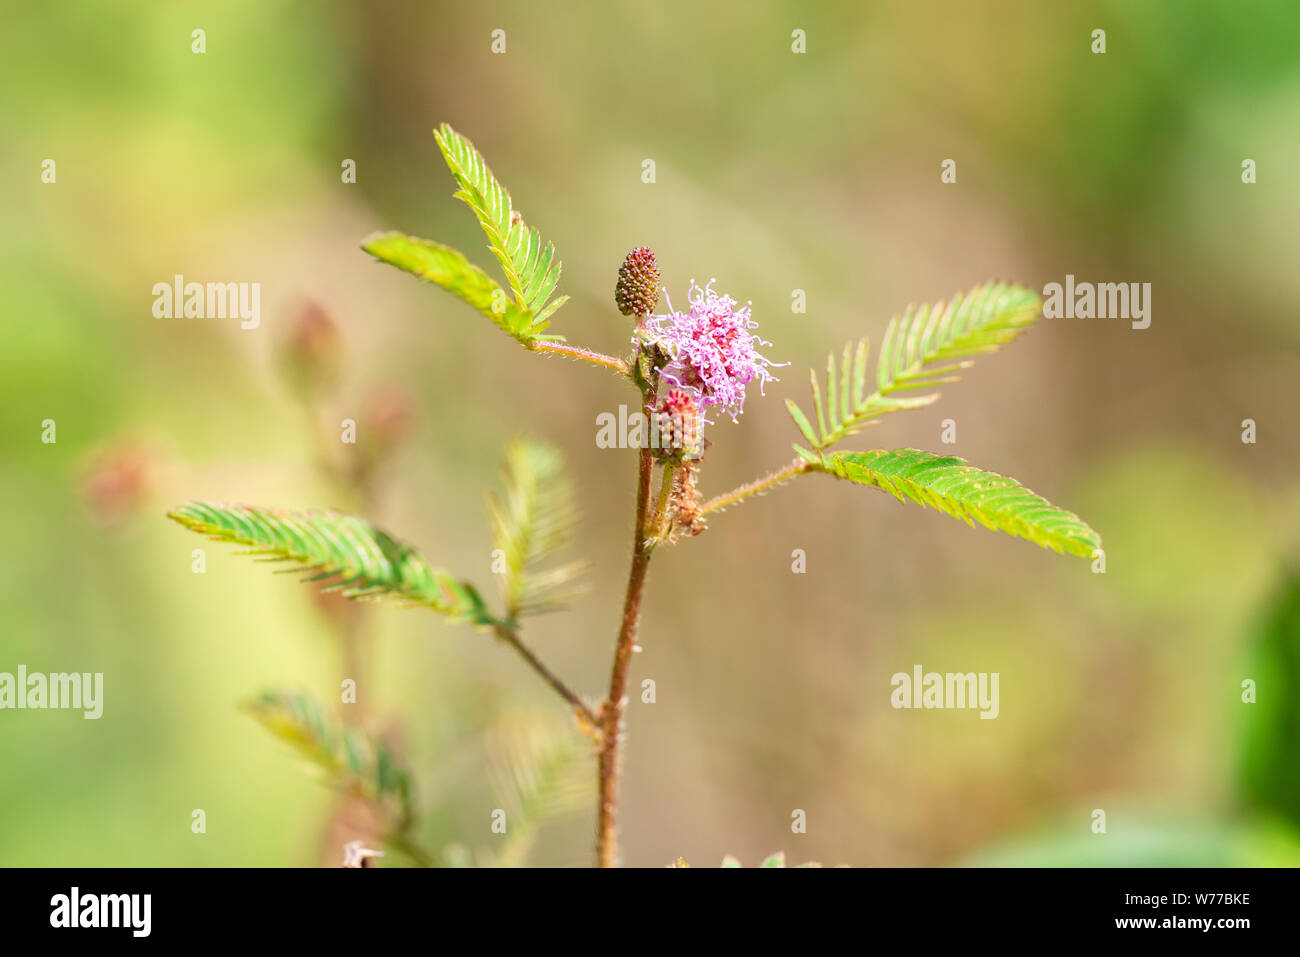 Plant Mimosa pudica close-up in natural environment with natural light. Thailand, Koh Chang Island. Stock Photo